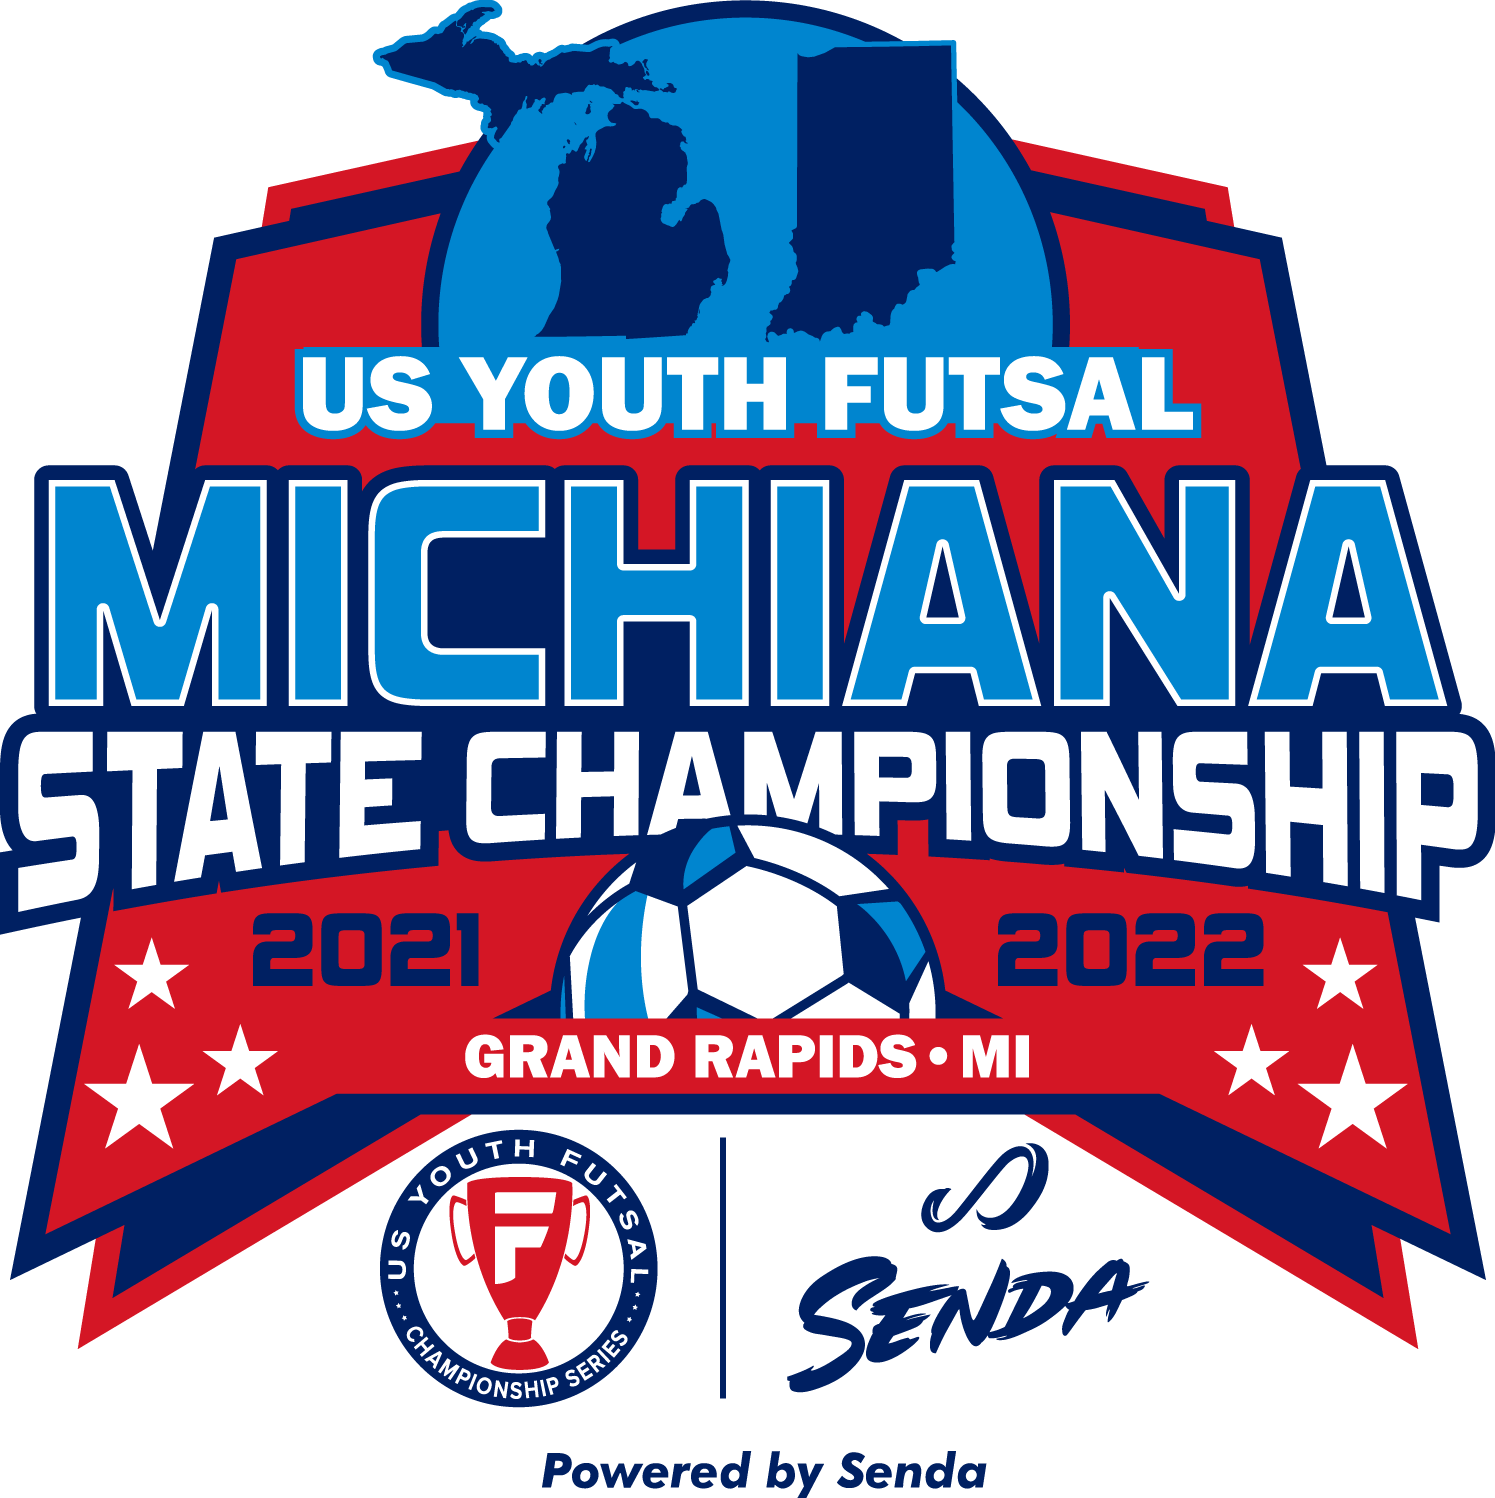 USYF Championship - Michigan Sports Academies (New